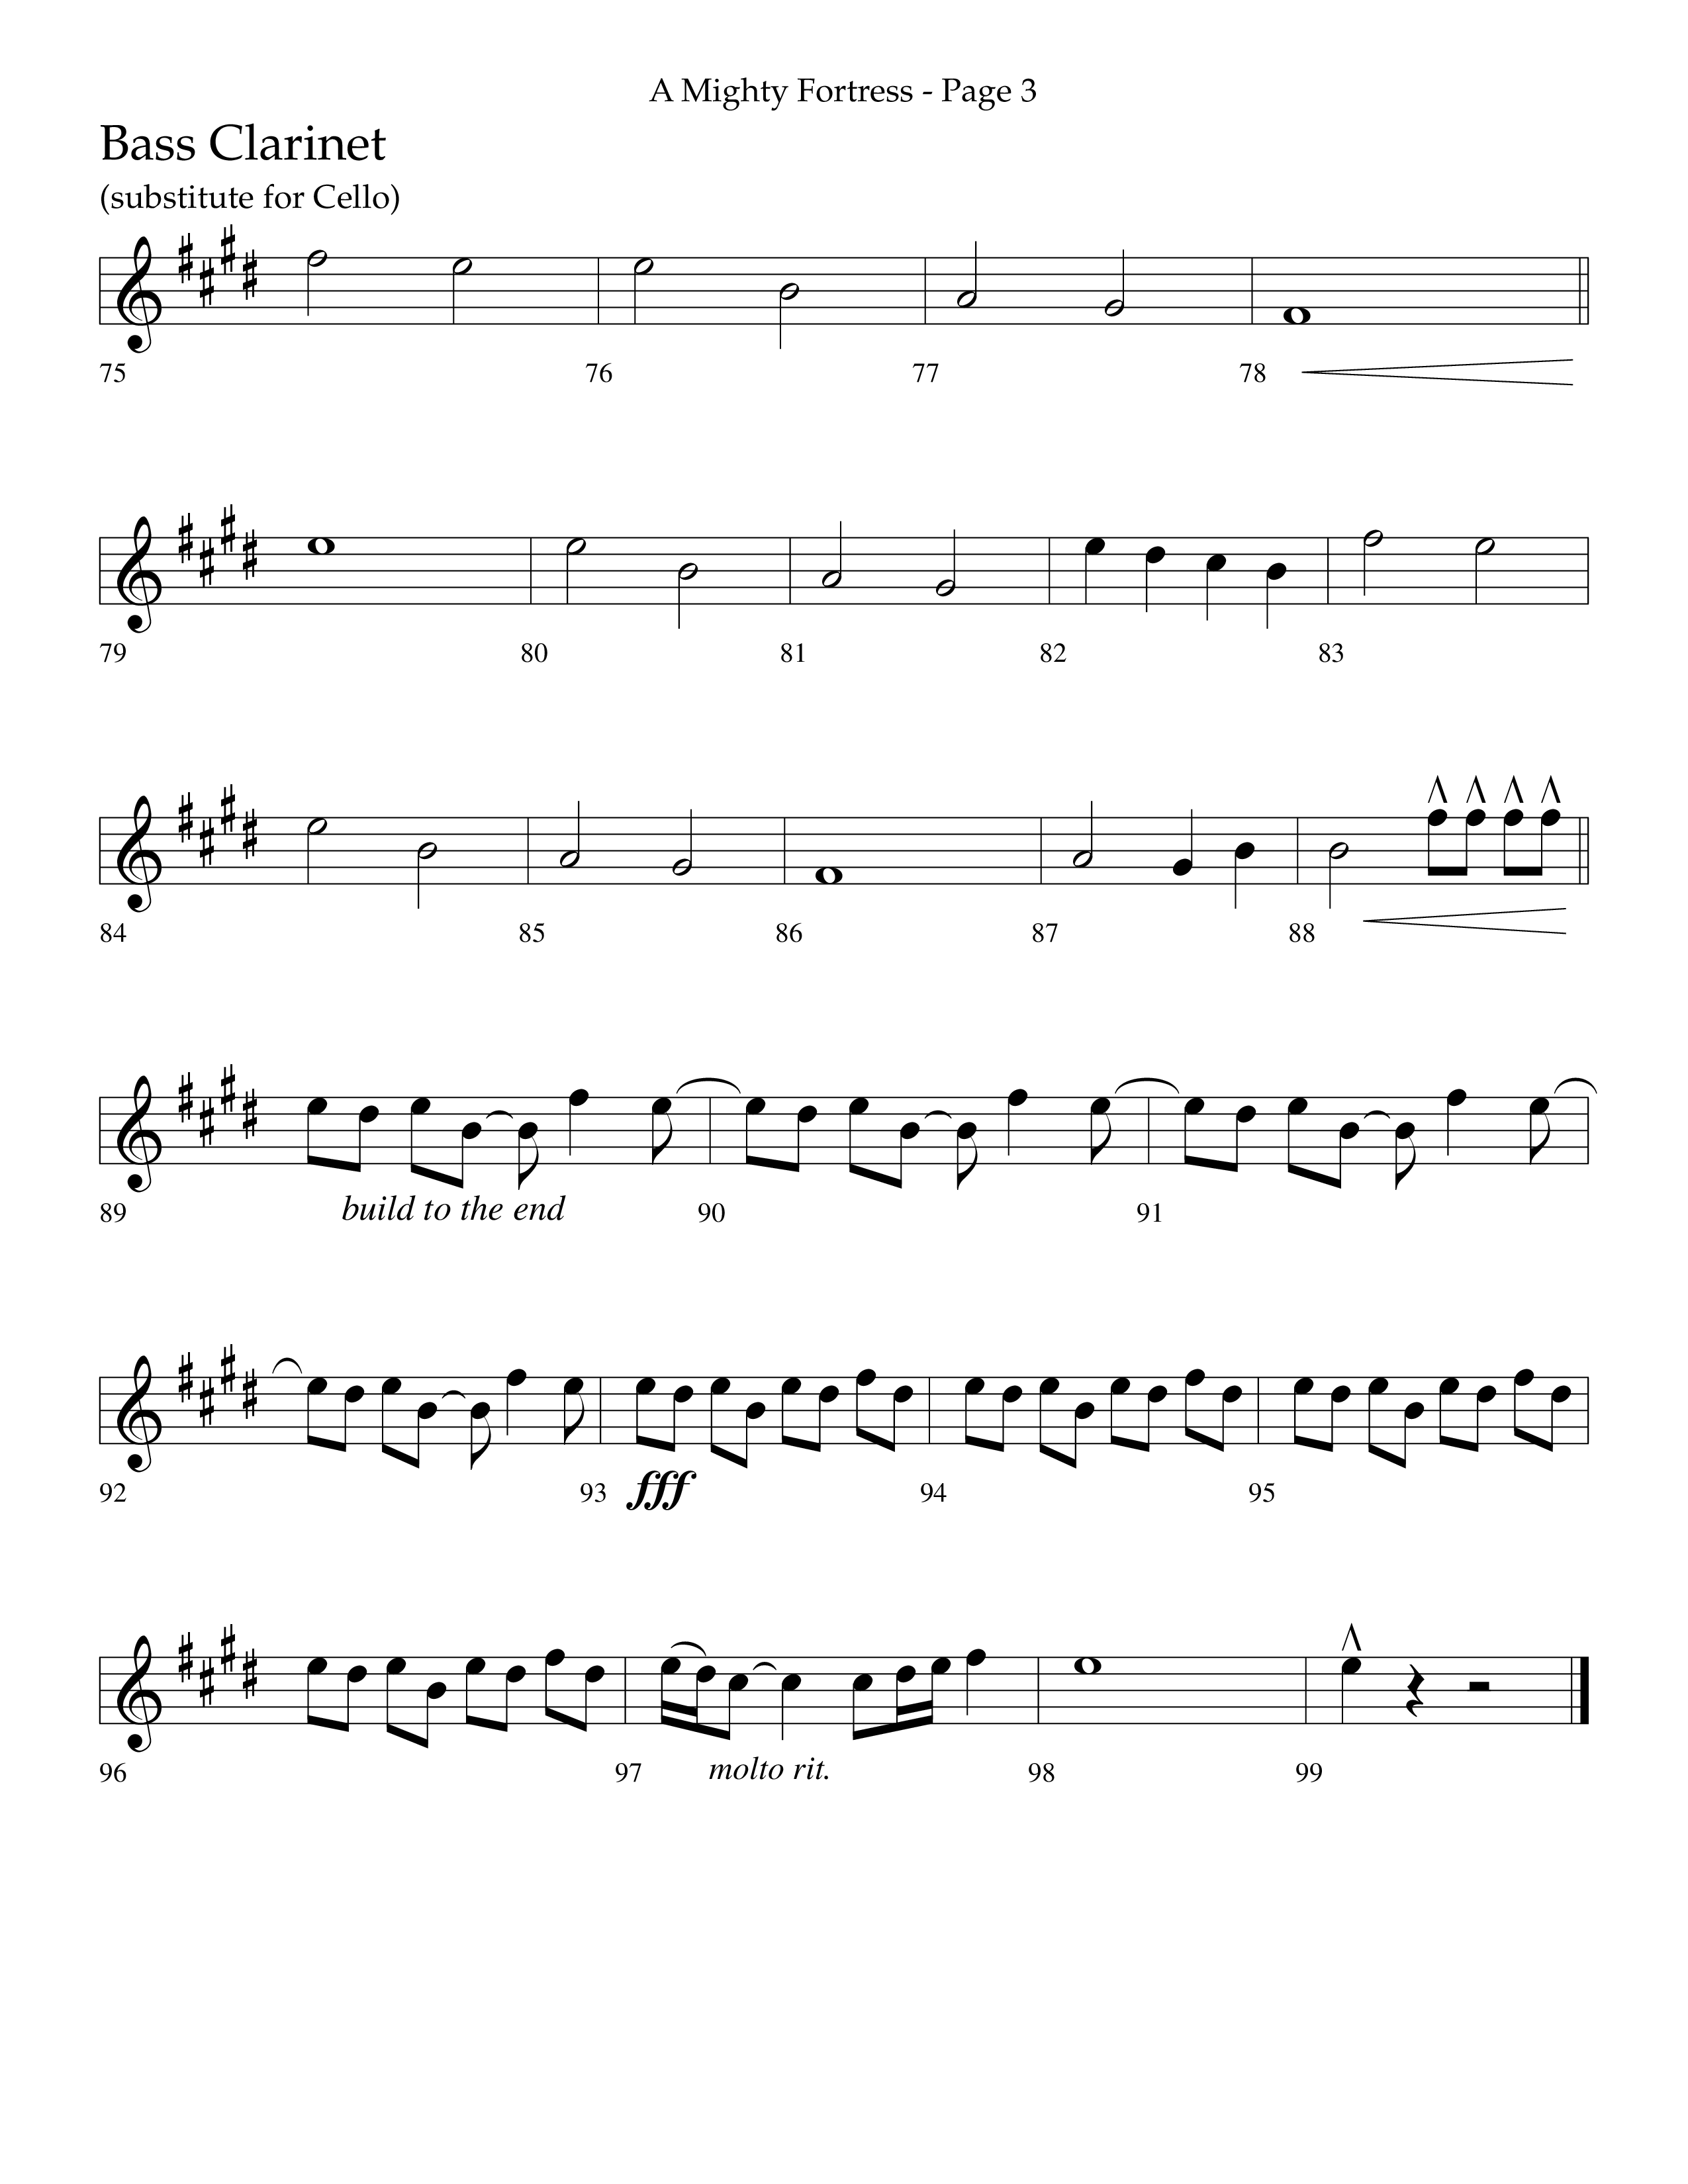 A Mighty Fortress (Choral Anthem SATB) Bass Clarinet (Lifeway Choral / Arr. Cliff Duren)